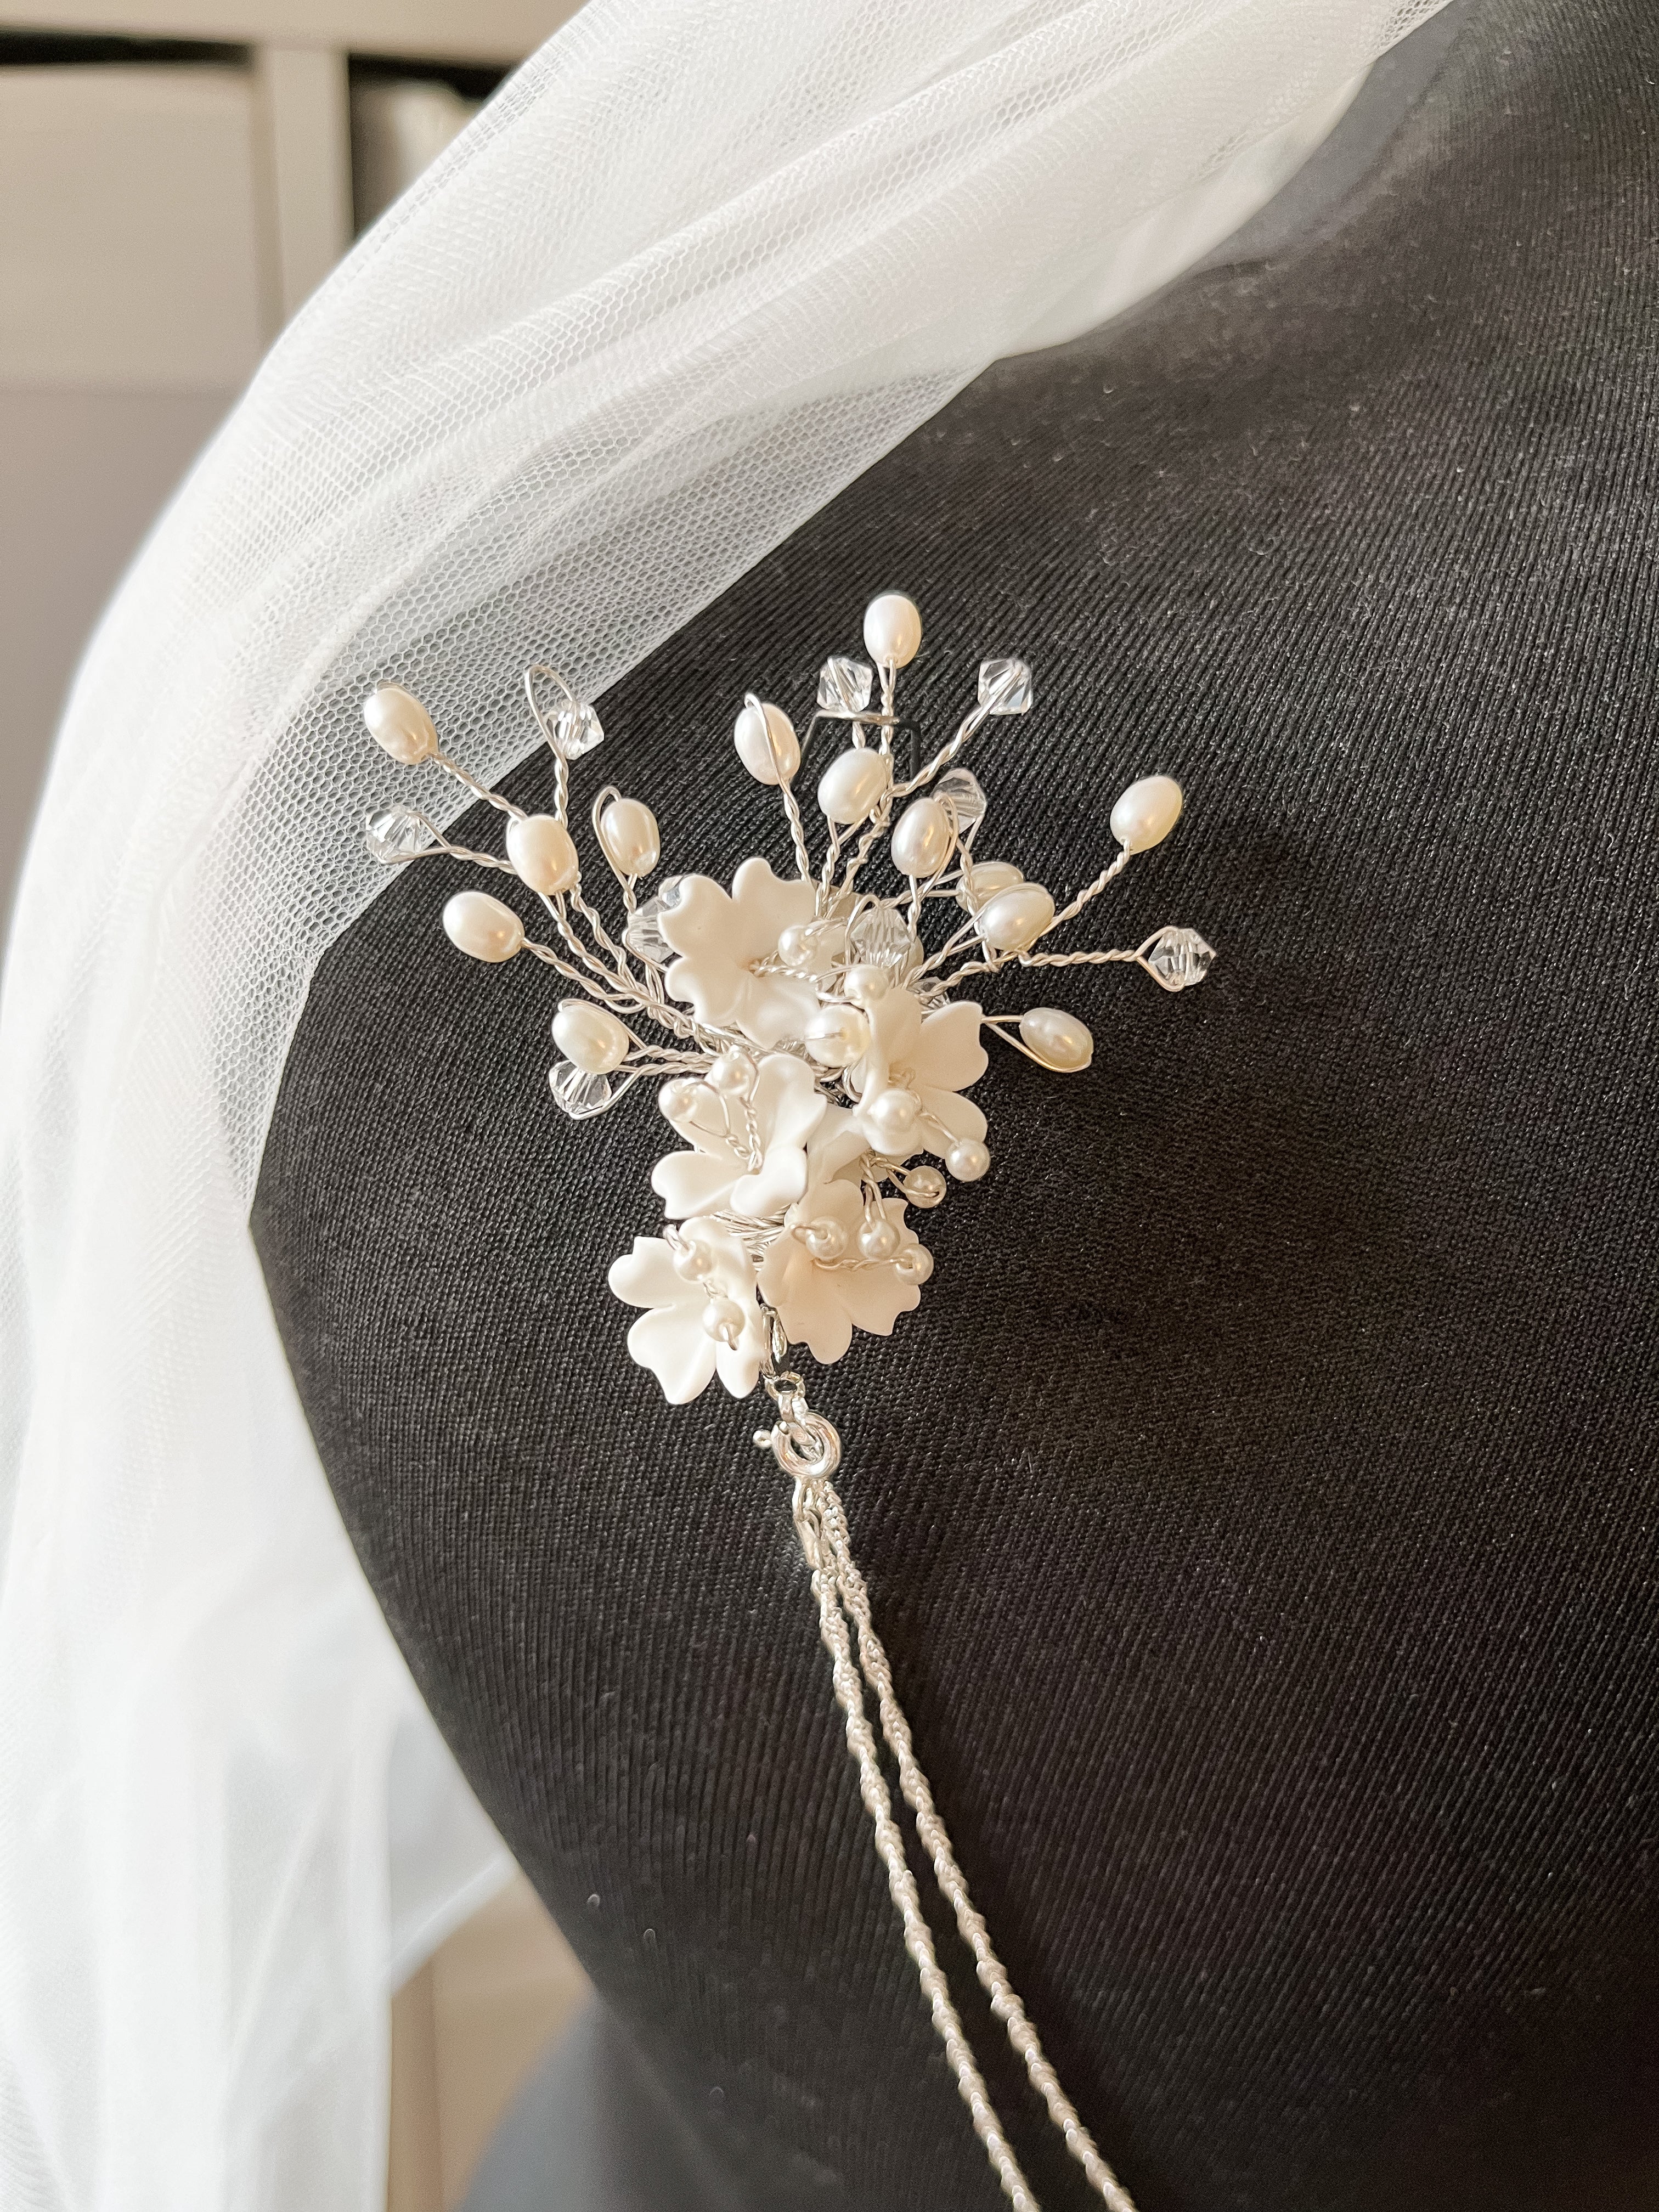 Bridal Back drape Dress Jewellery